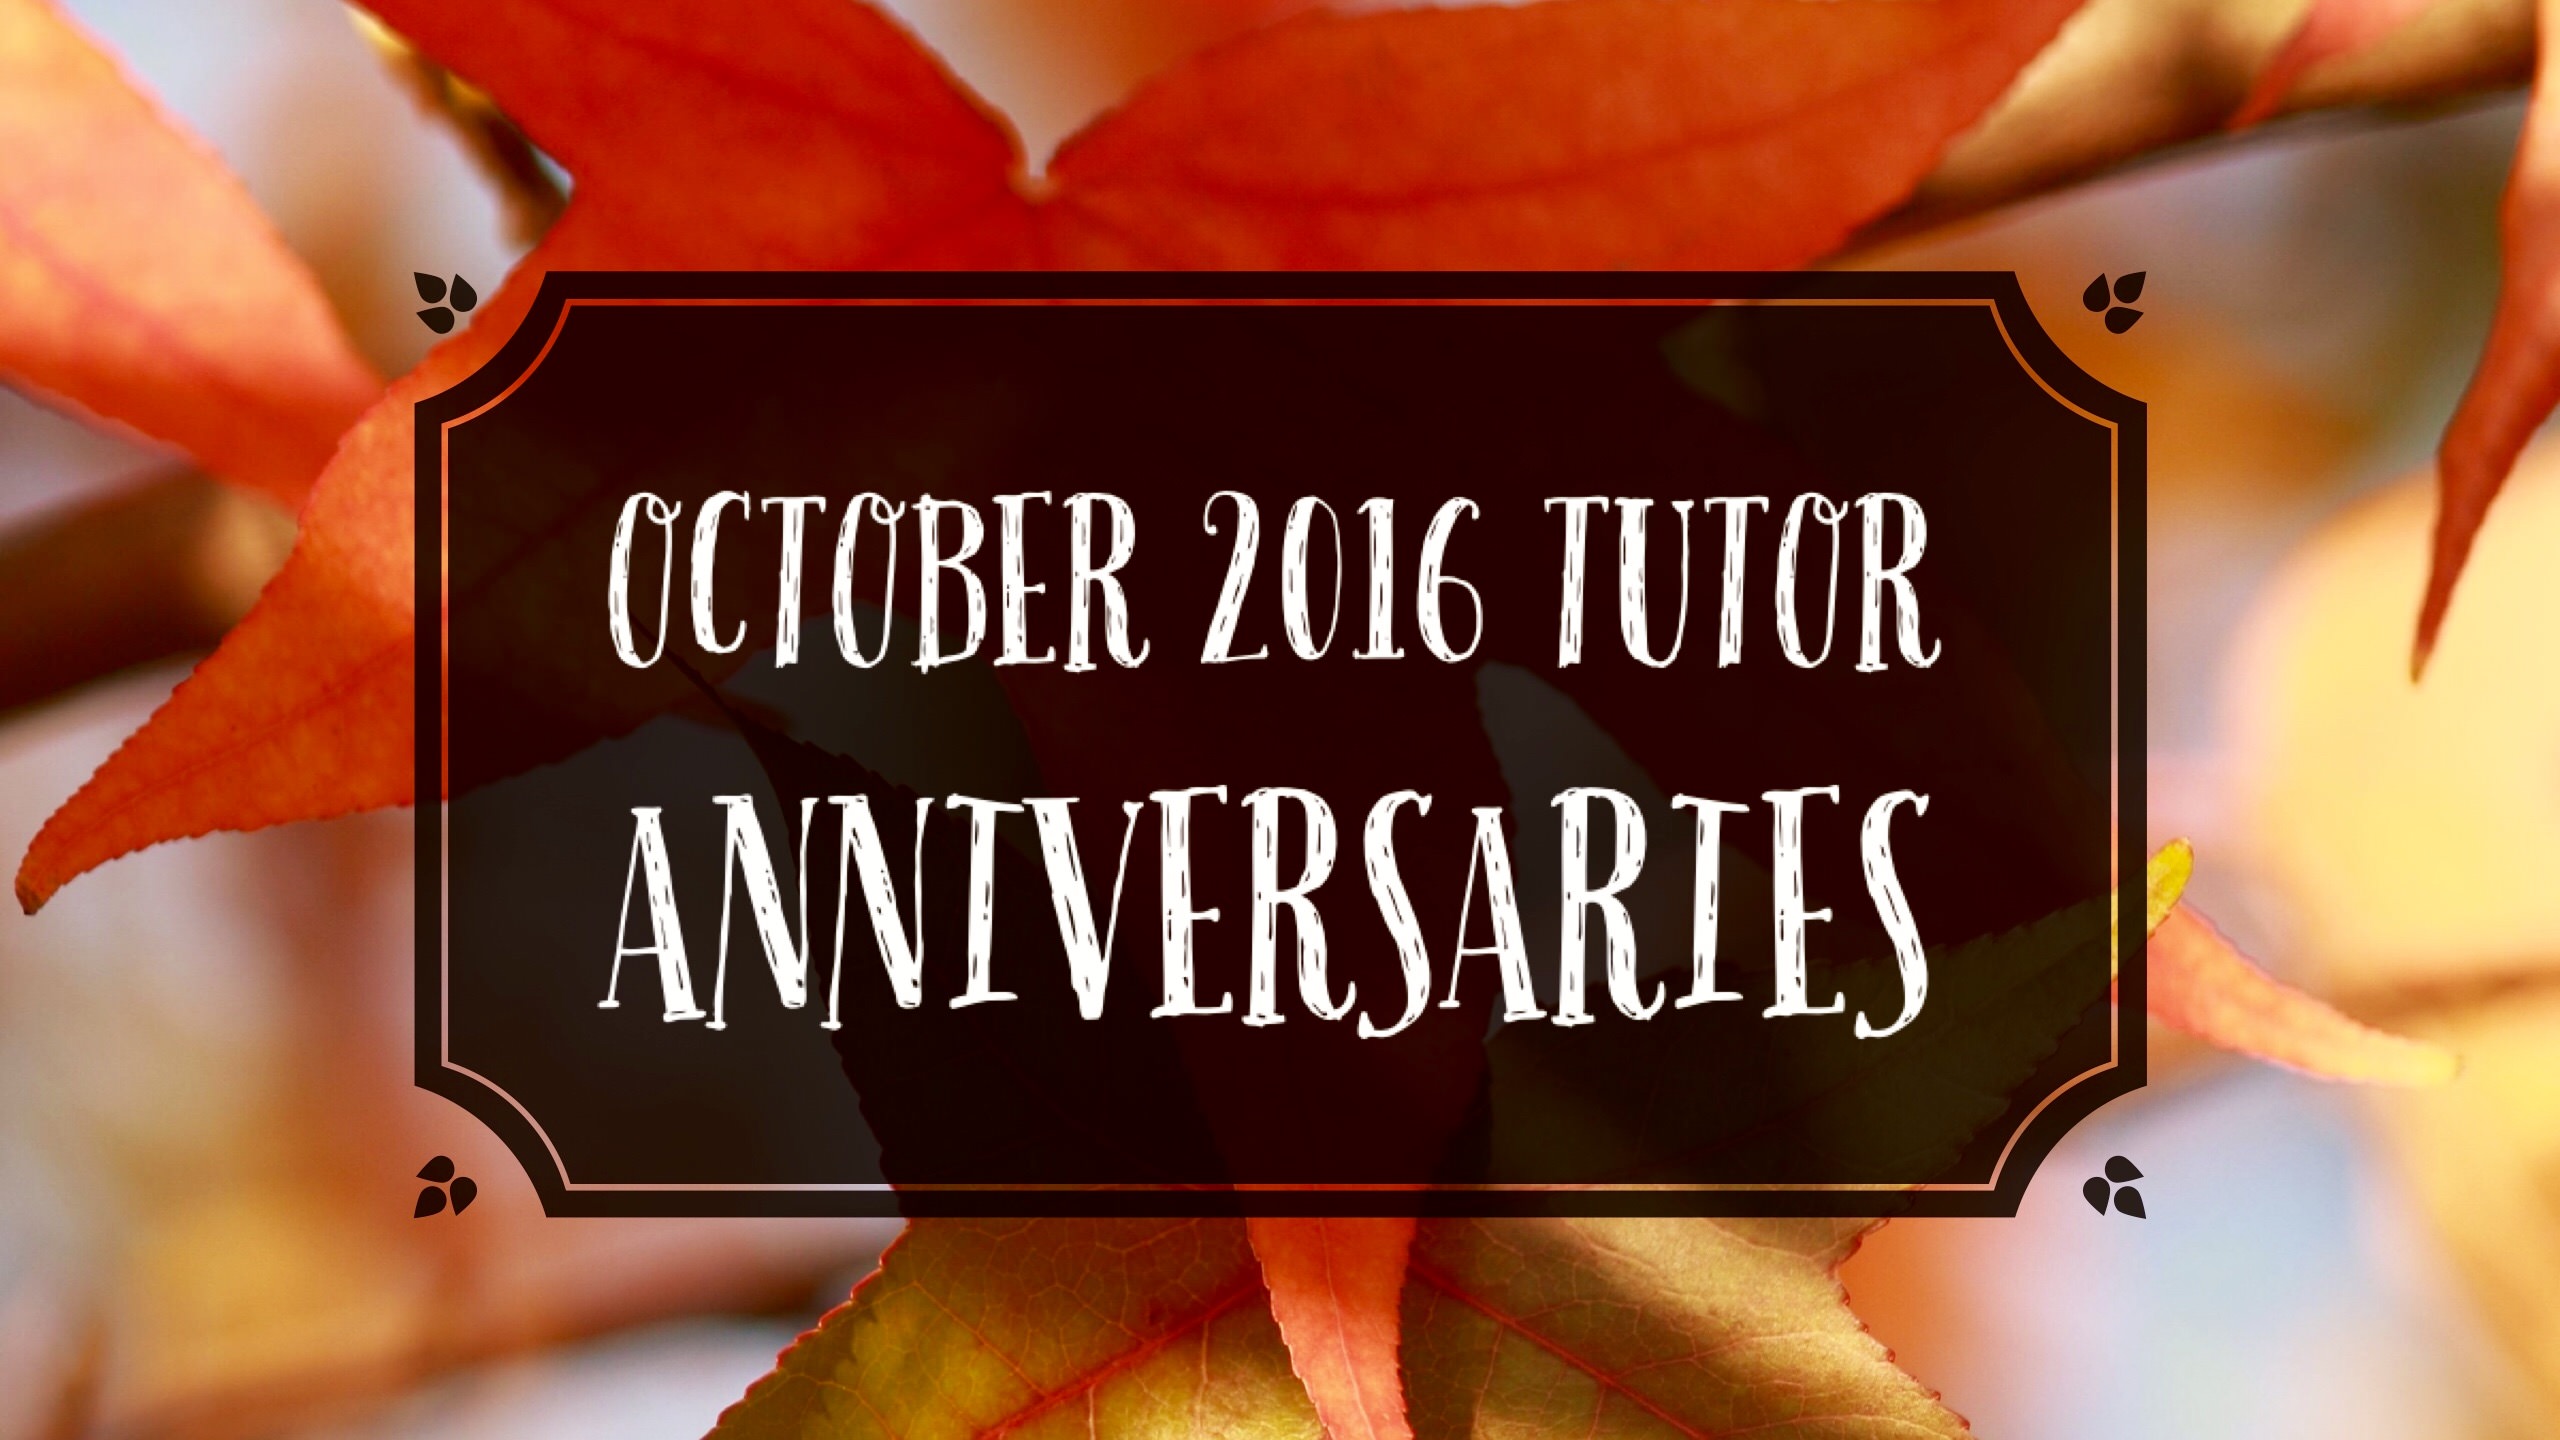 Tutor Anniversaries October 2016